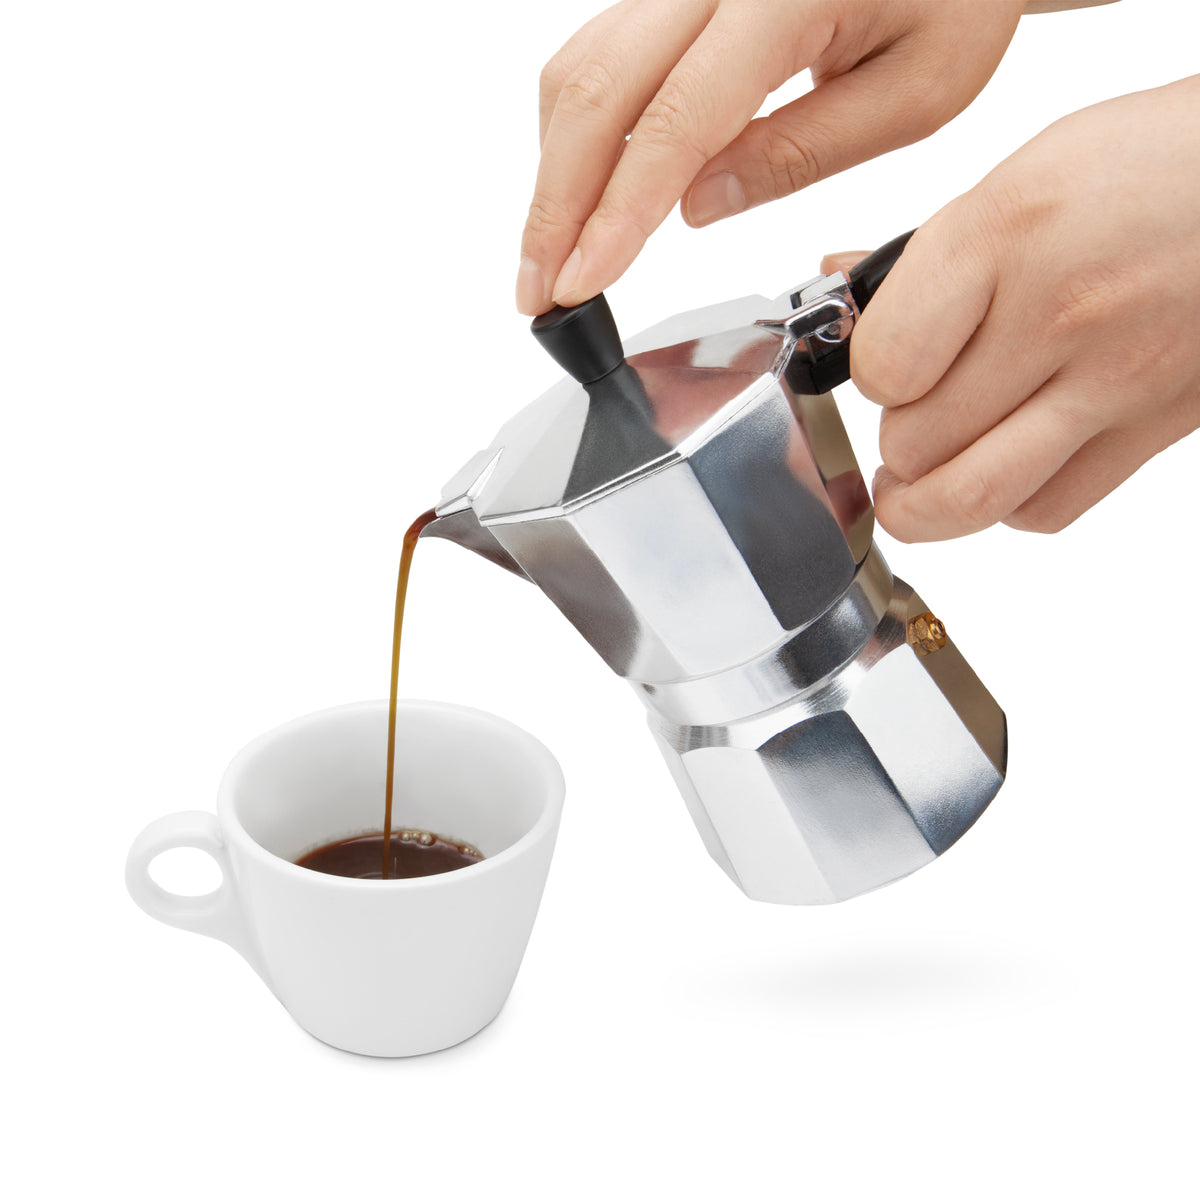 EspressoWorks Moka Pot 3 Cup Stovetop Espresso Maker pouring coffee